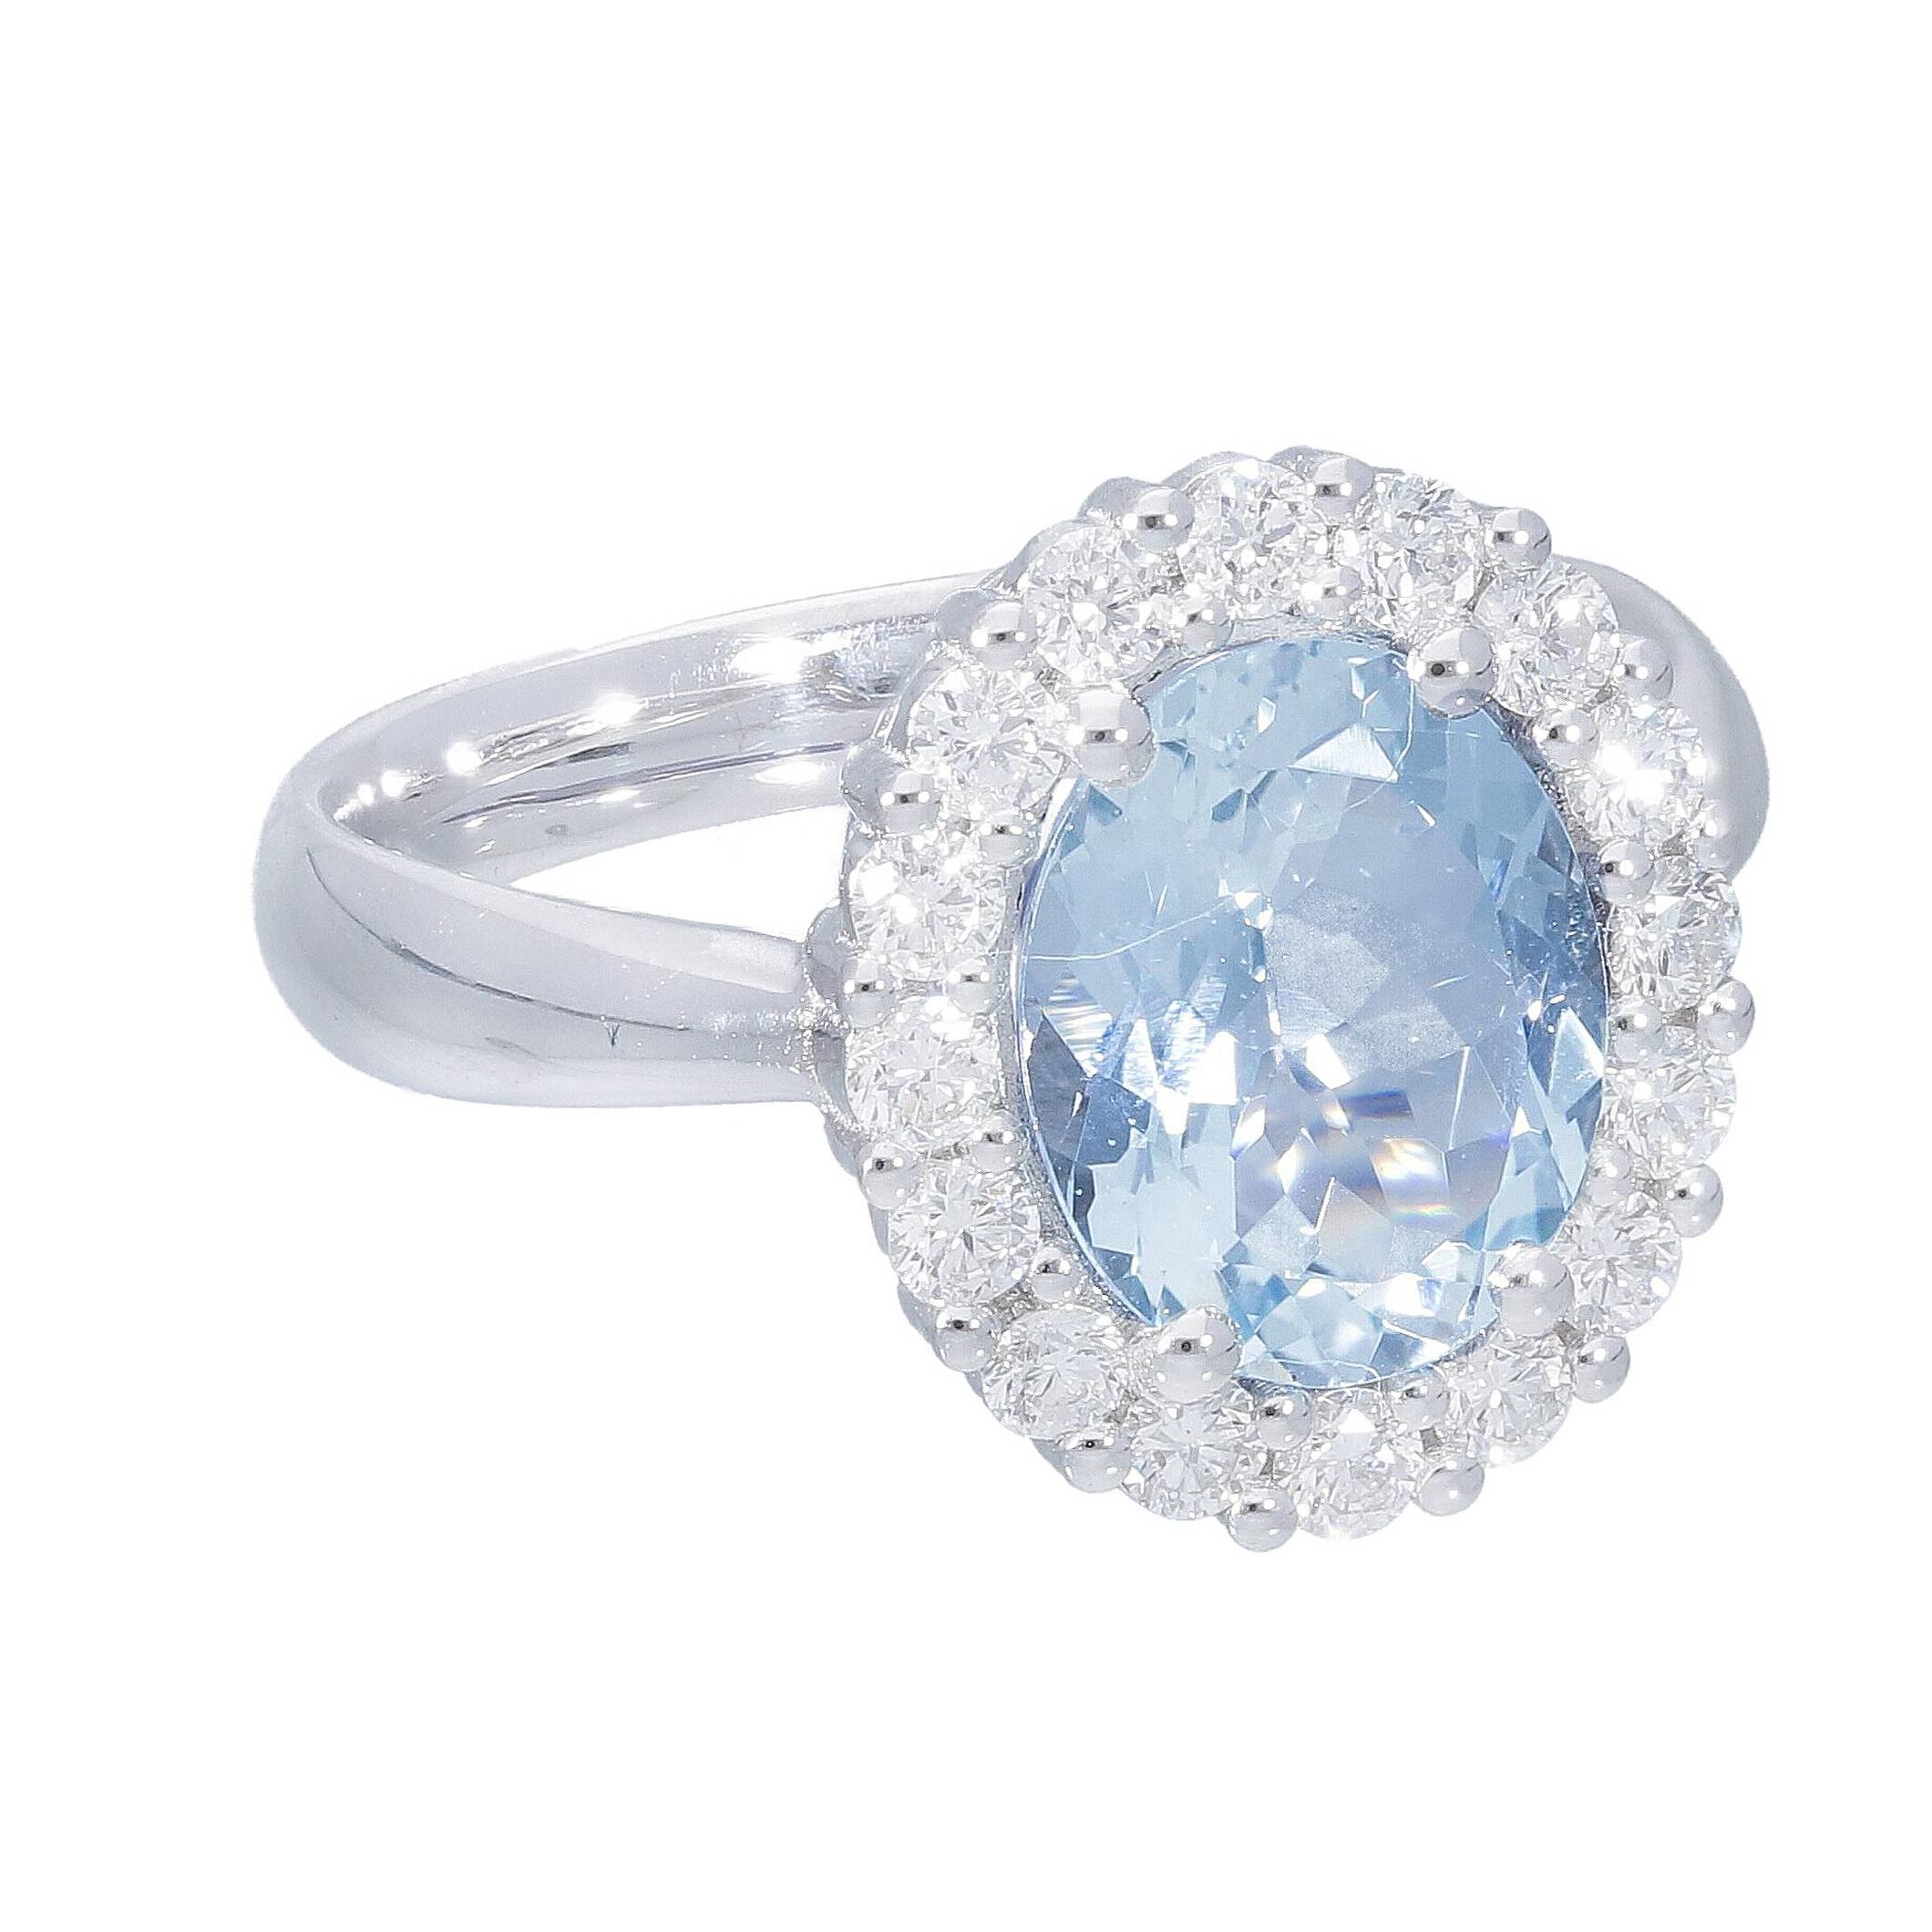 For Sale:  18K White Gold Pradera Halo Engagement Ring with Aquamarina and Diamonds 2